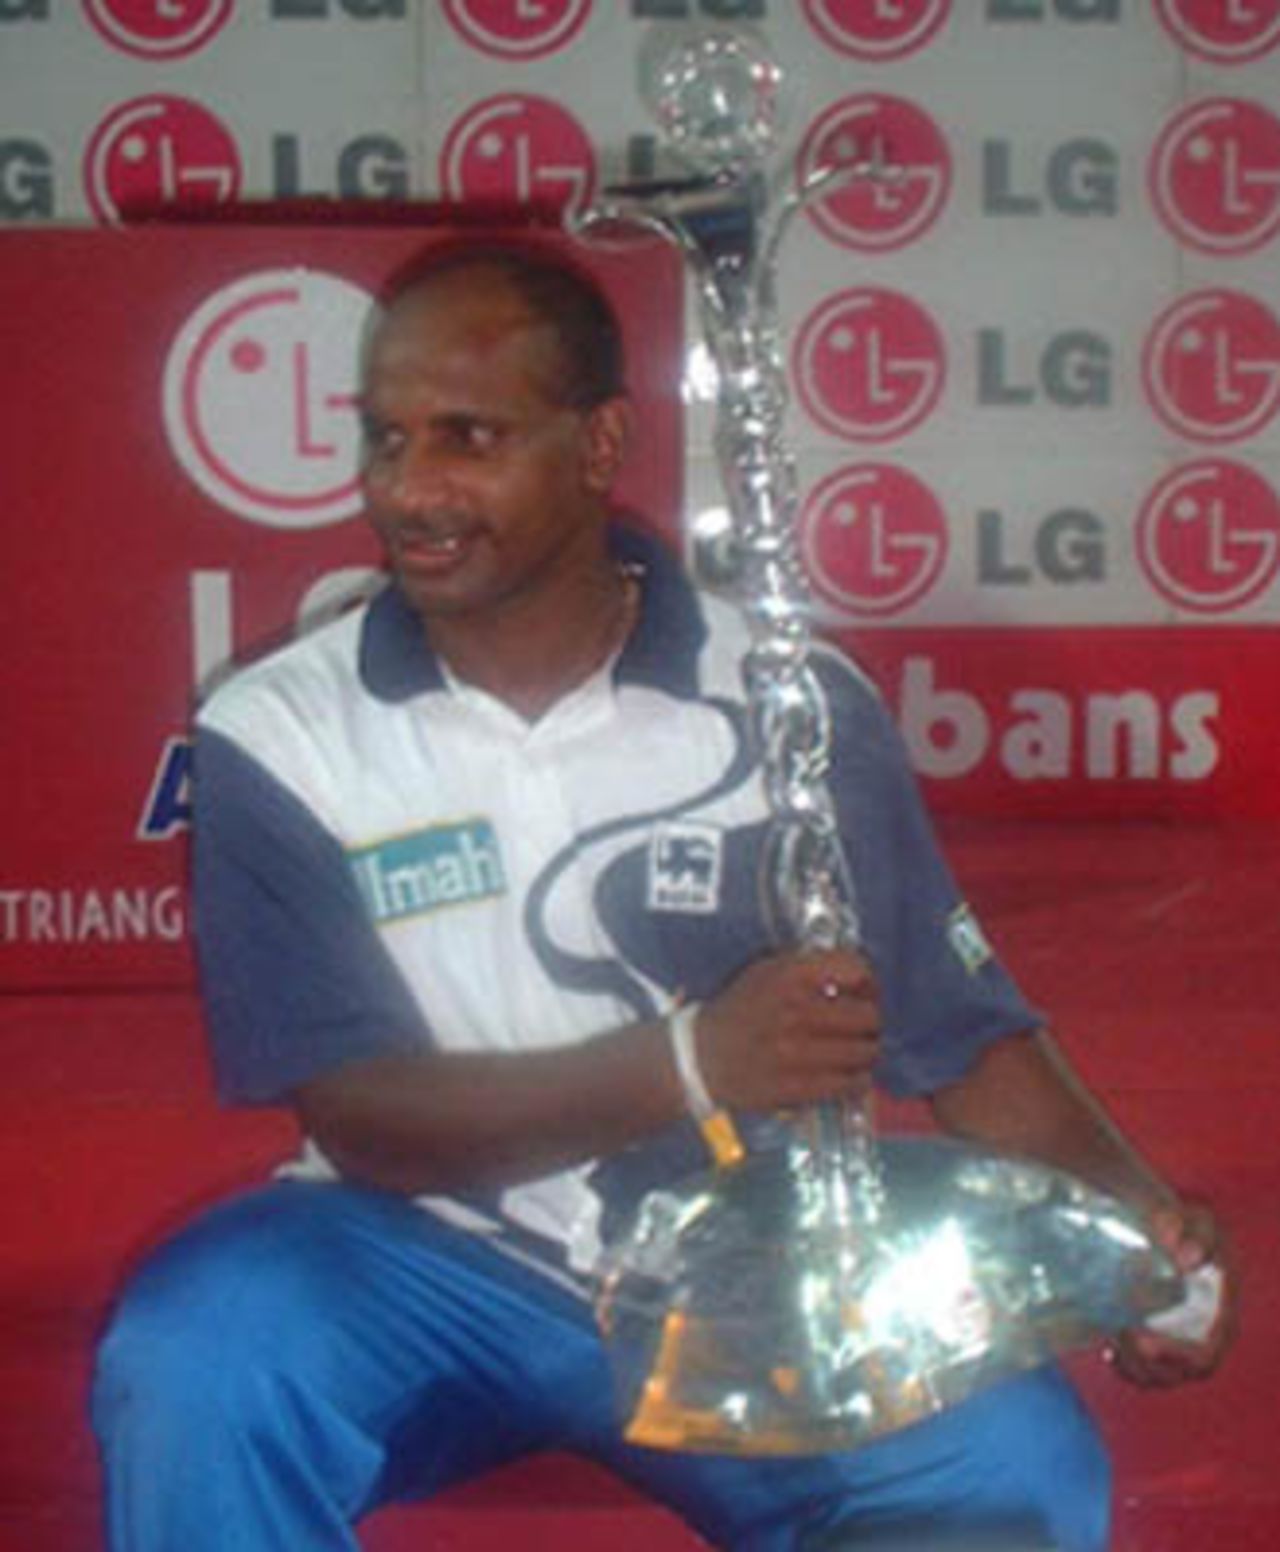 The Final: Sri Lanka v West Indies at  R.Premadasa International Stadium in Colombo, LG Abans Triangular Series Dec 2001.